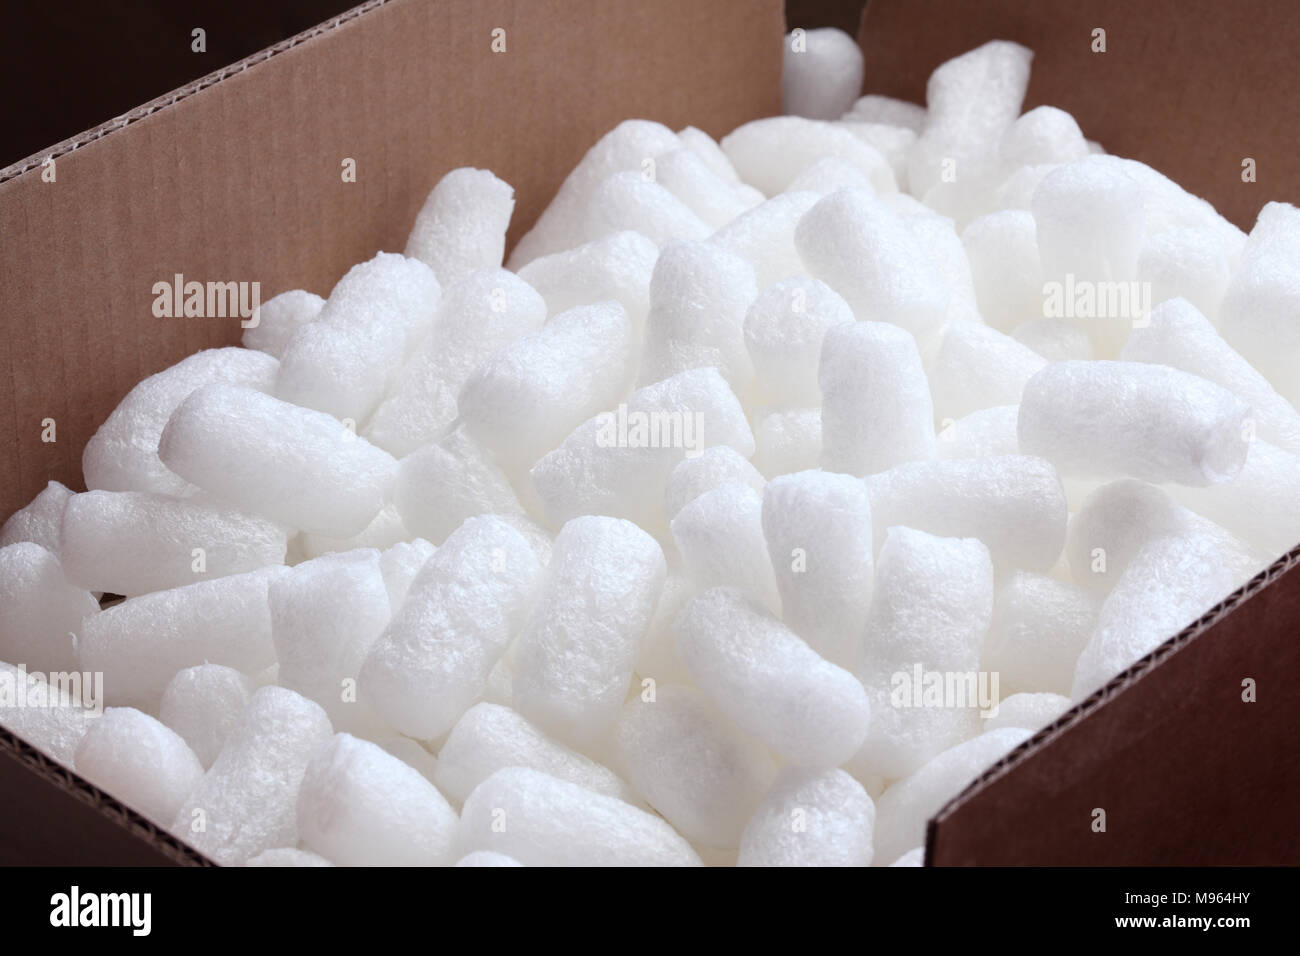 https://c8.alamy.com/comp/M964HY/polystyrene-or-styrofoam-protective-packaging-beads-M964HY.jpg